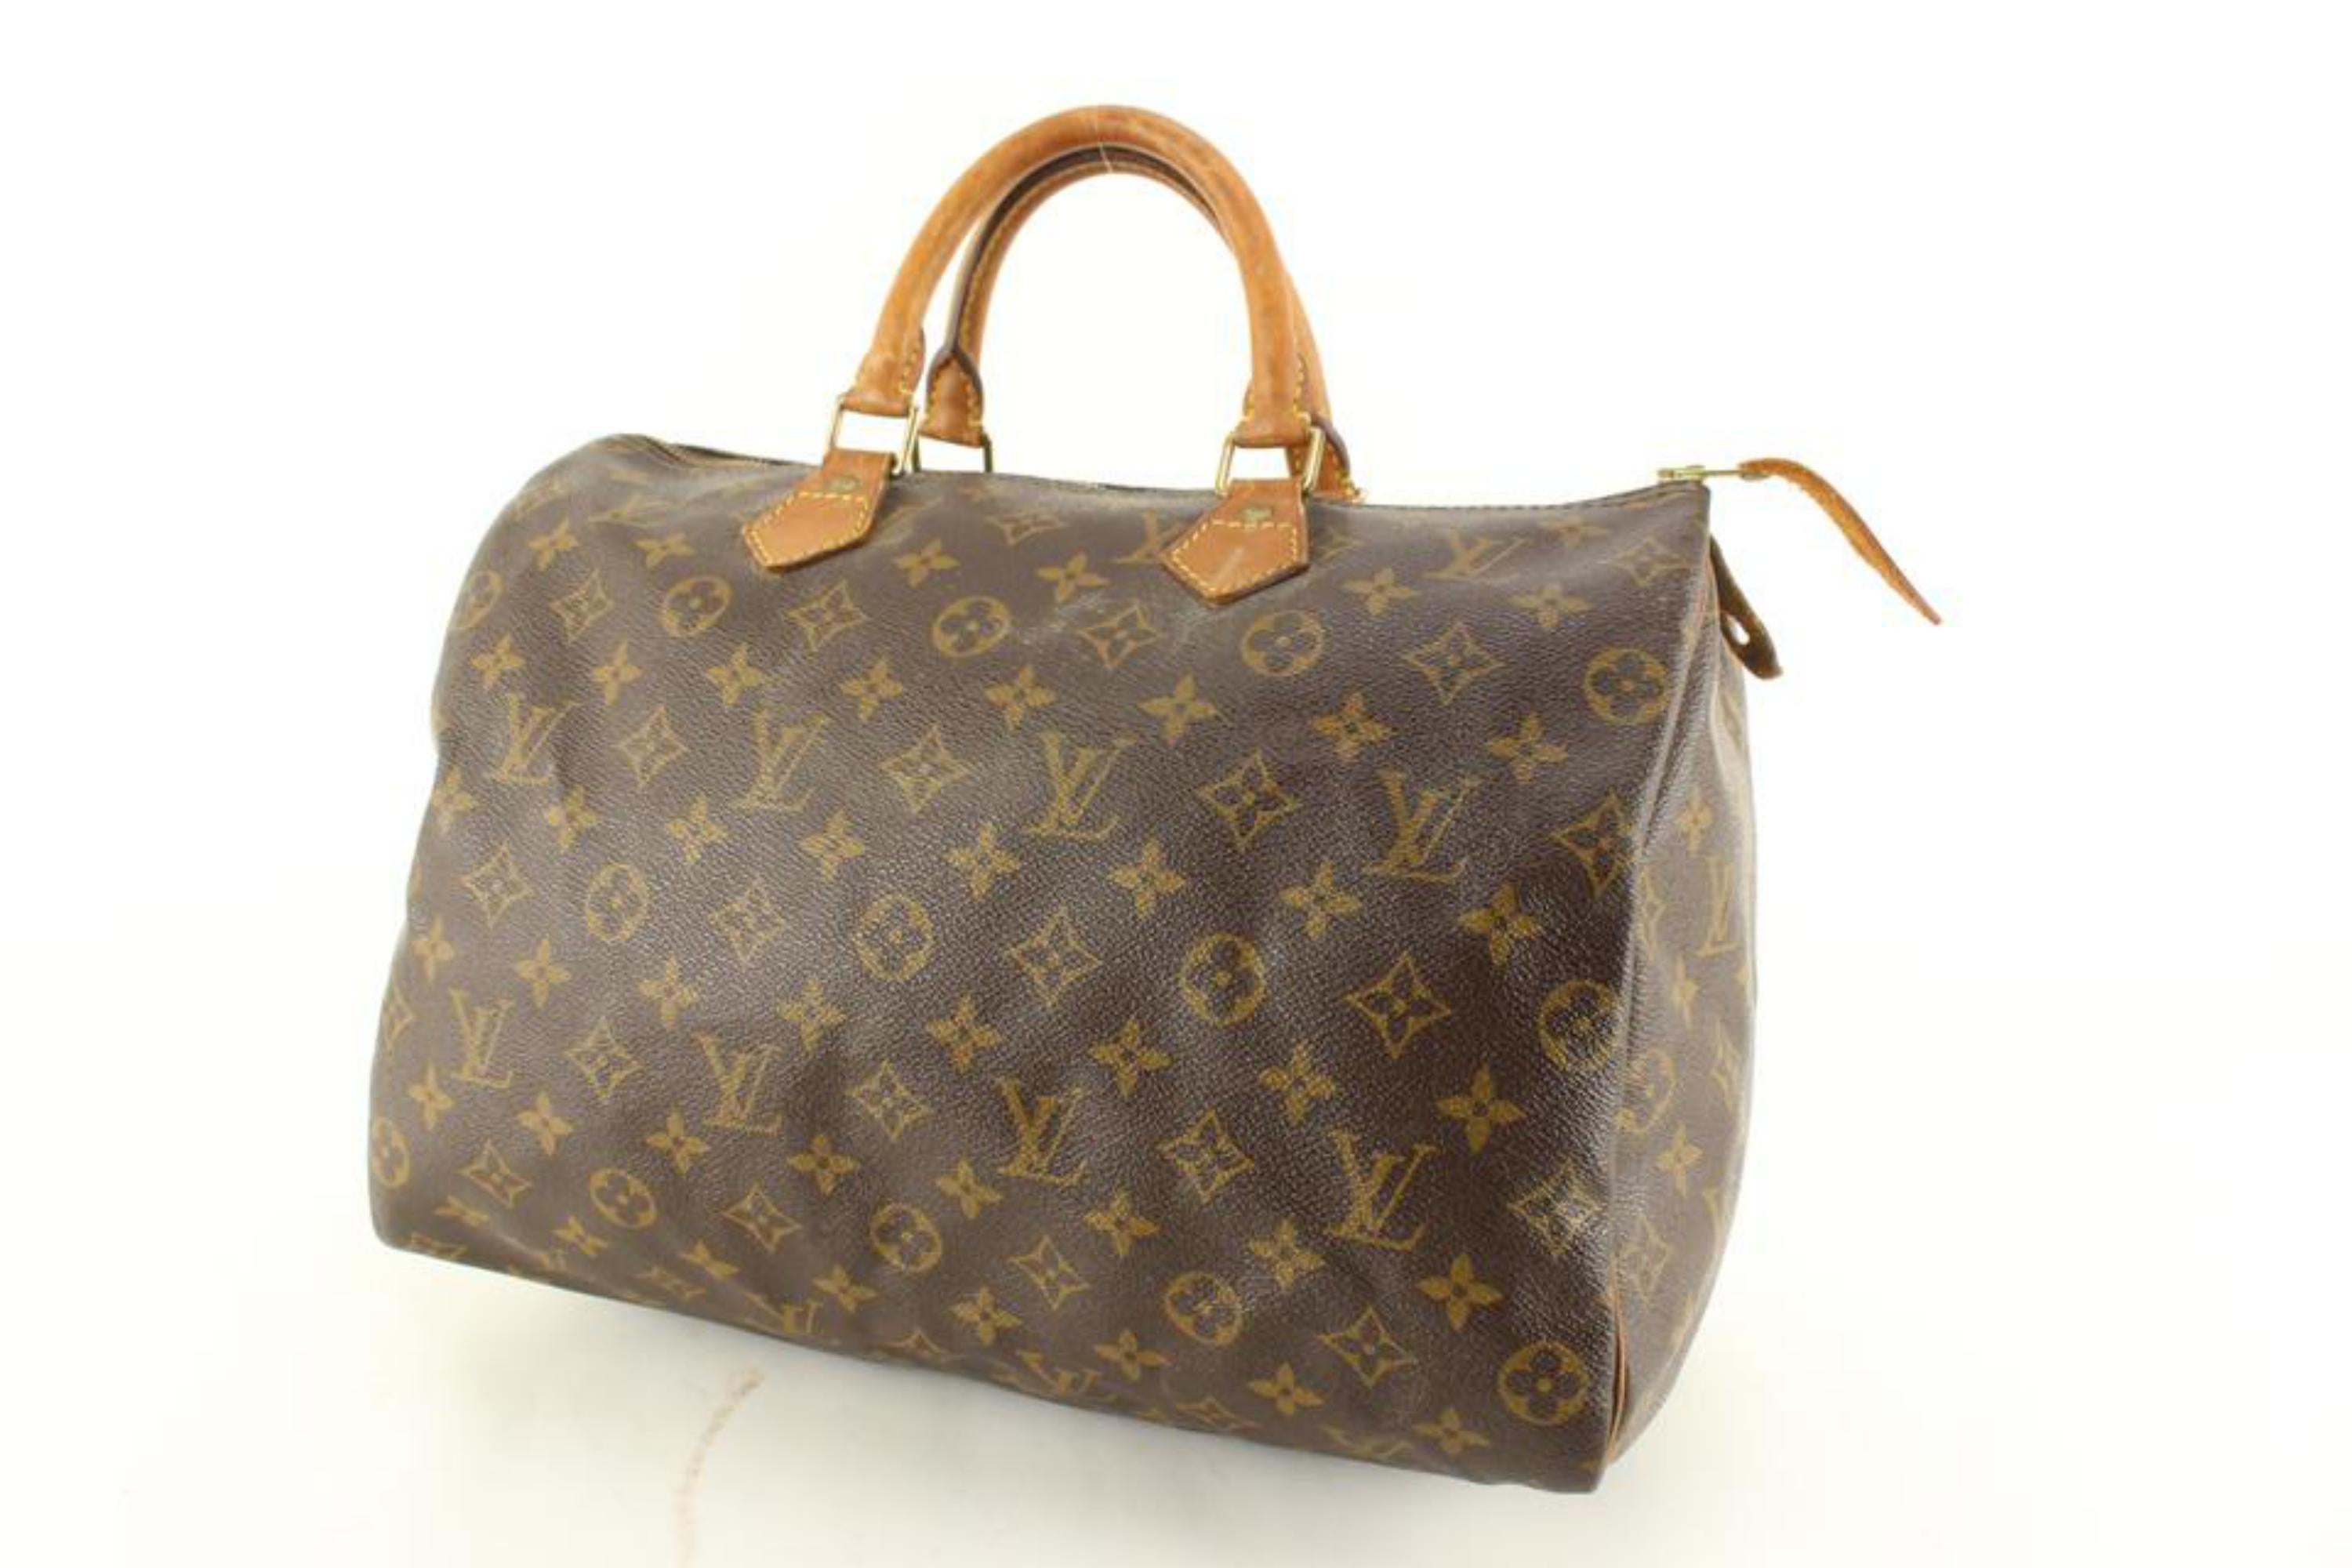 Louis Vuitton Monogram Speedy 35 Boston Bag 13lz712s 7